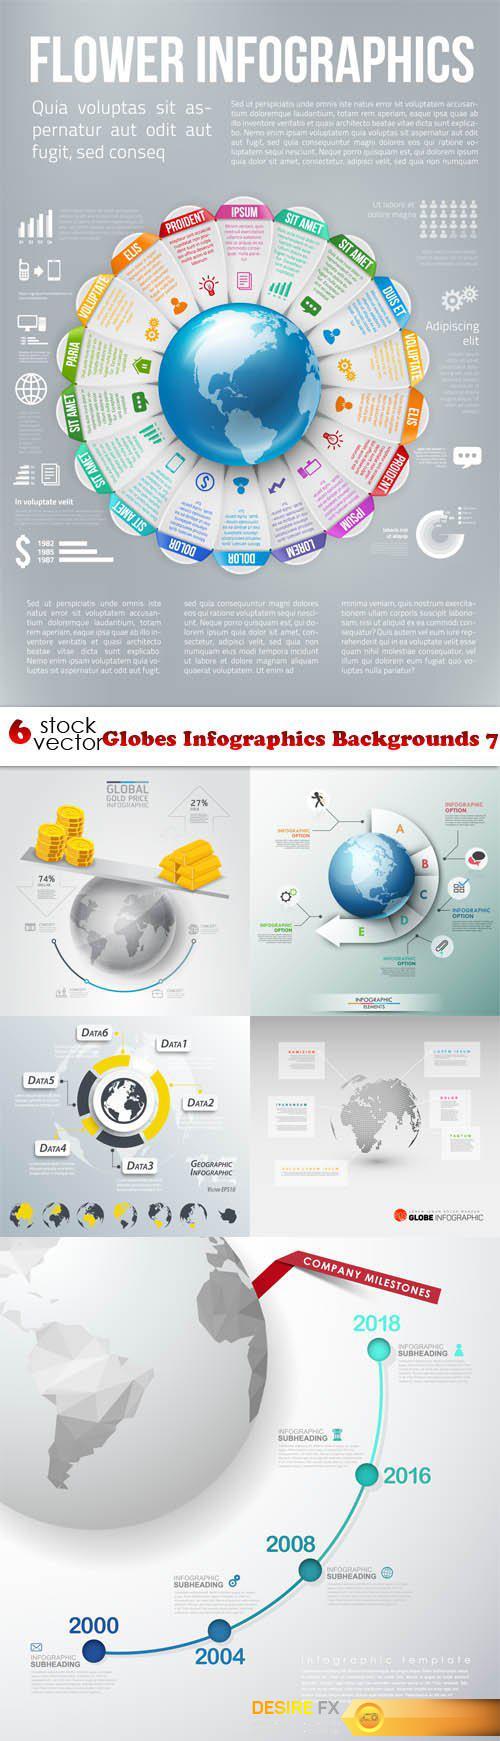 Vectors - Globes Infographics Backgrounds 7